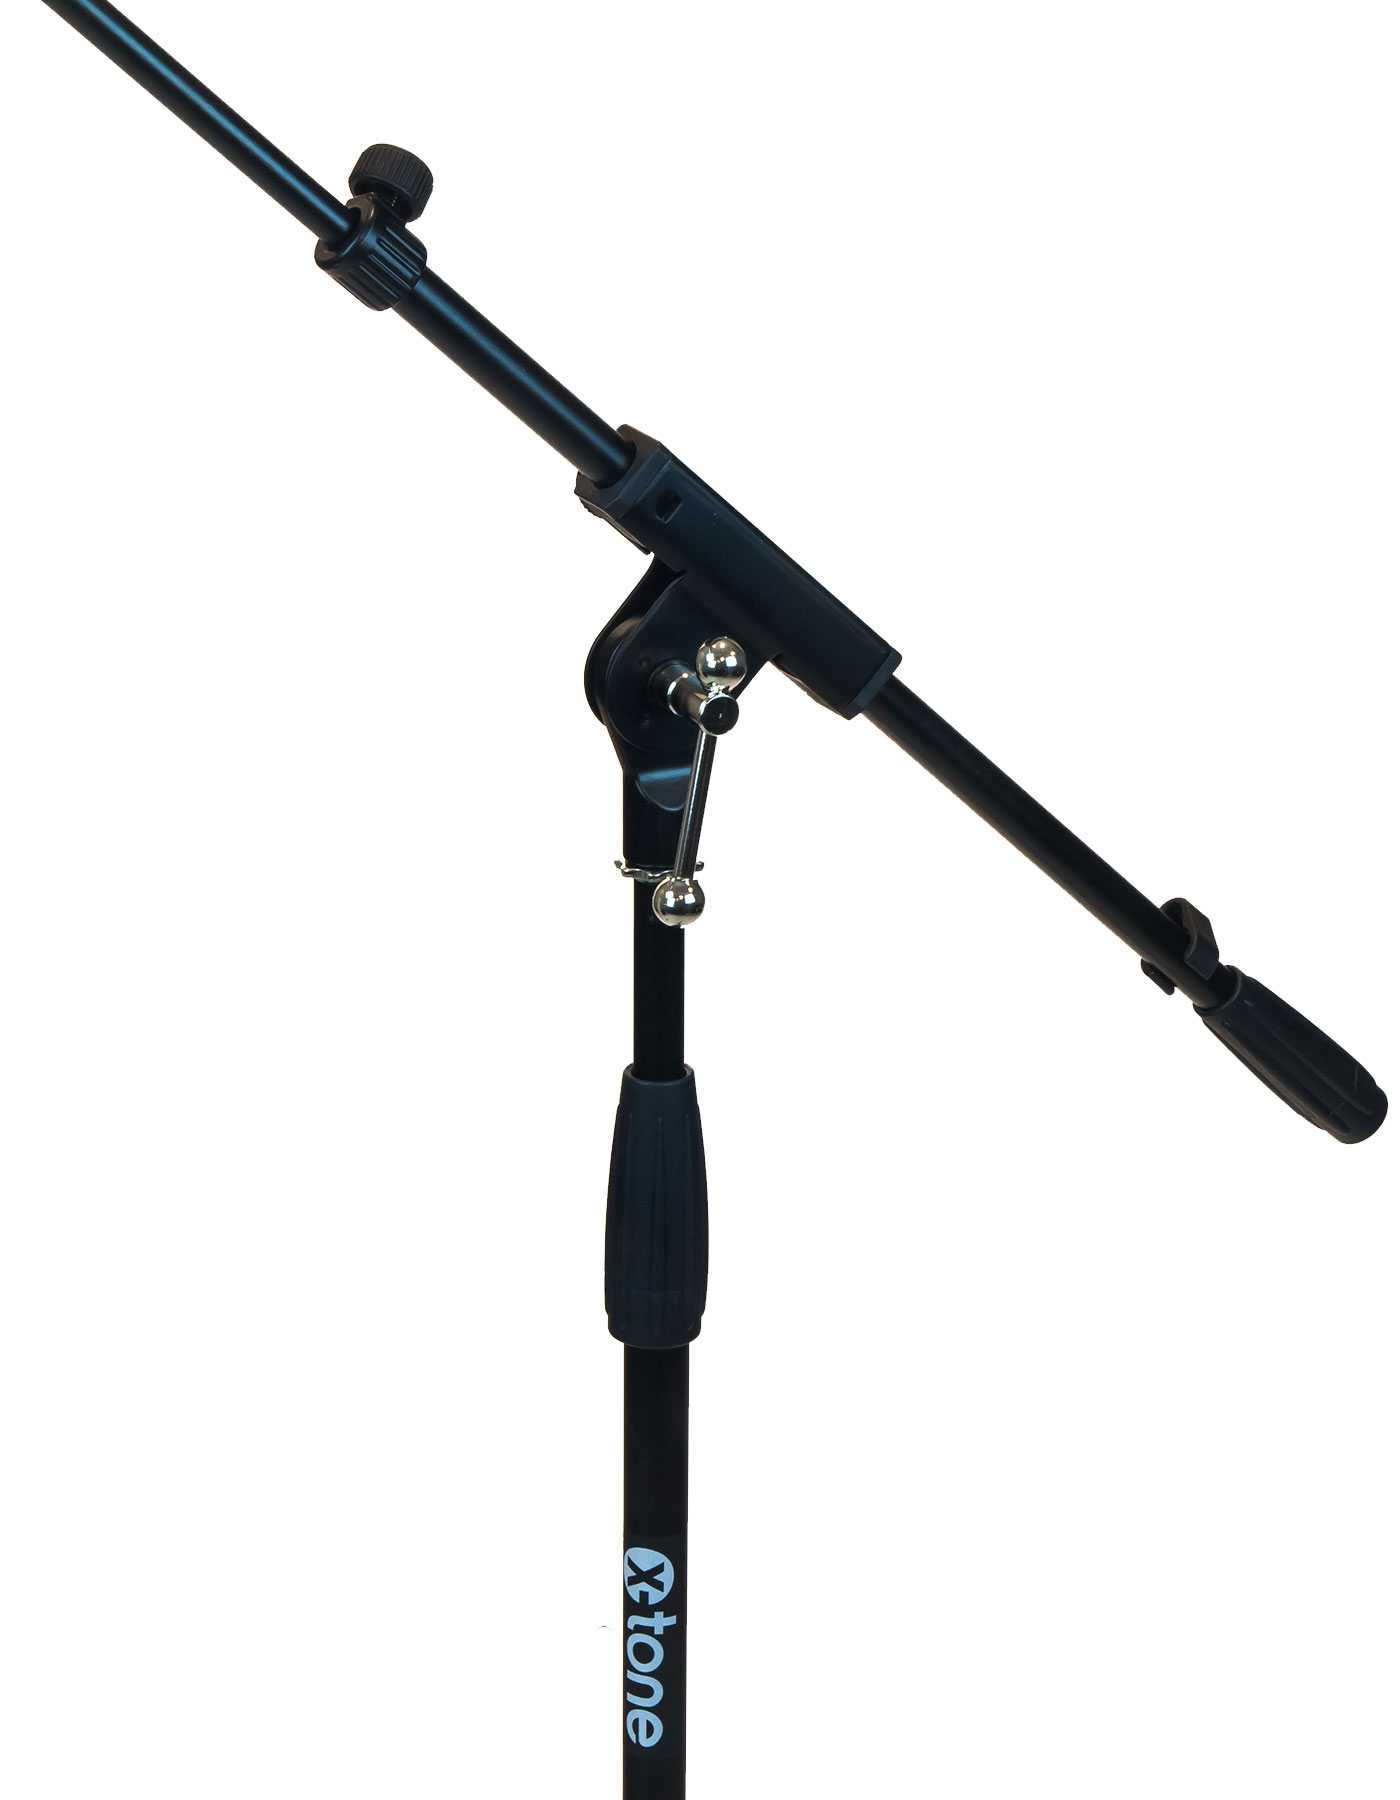 X-tone Xh 6001 Pied Micro Telescopique - Microphone stand - Variation 1